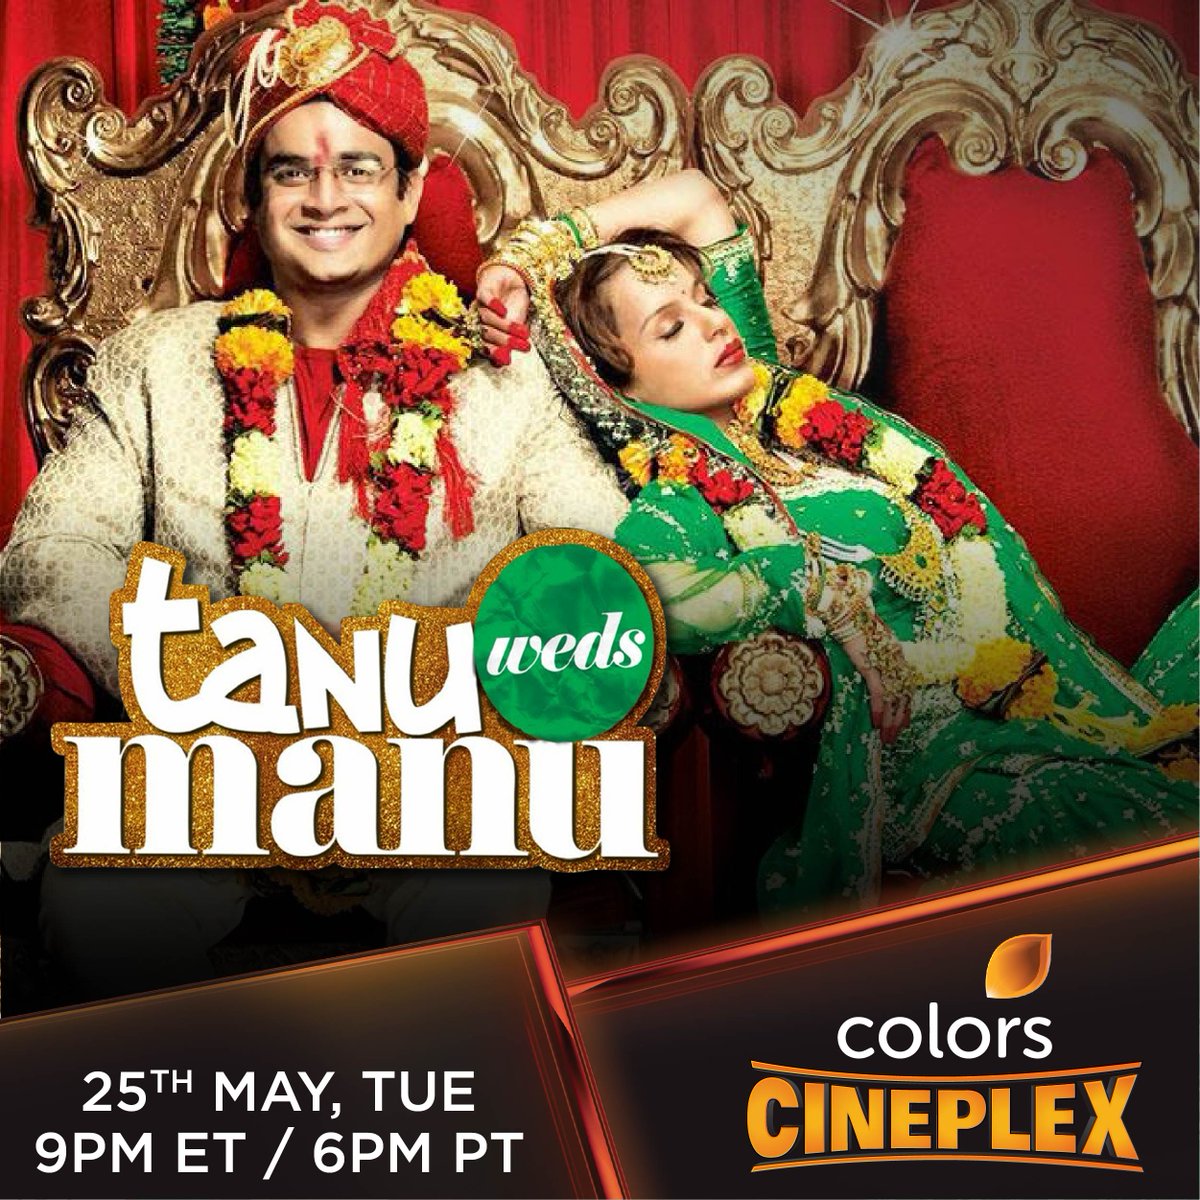 Watch the super hit movie #TanuWedsManu starring #RMadhavan and #KanganaRanaut tonight at 9 PM ET / 6 PM PT.